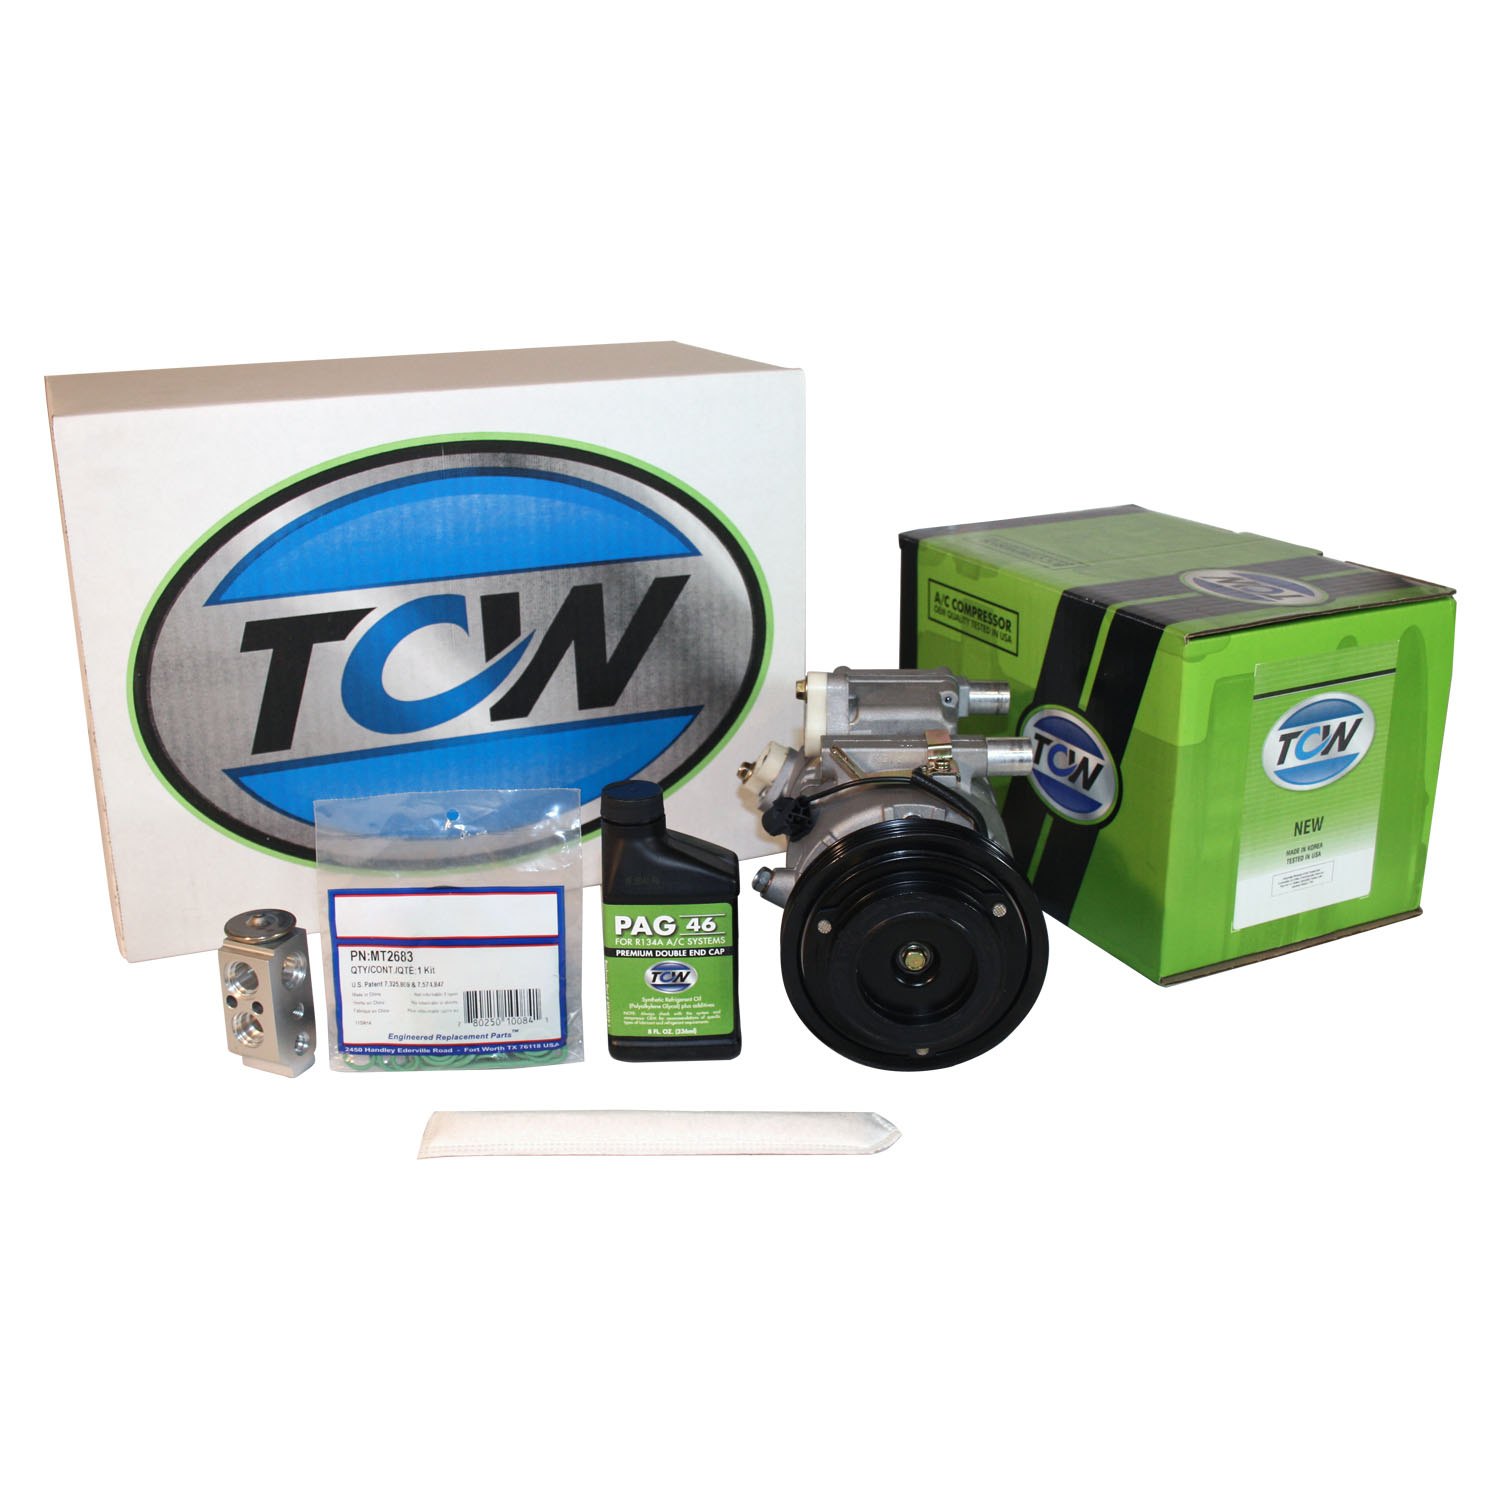 TCW Vehicle A/C Kit K1000373N New Product Image field_60b6a13a6e67c